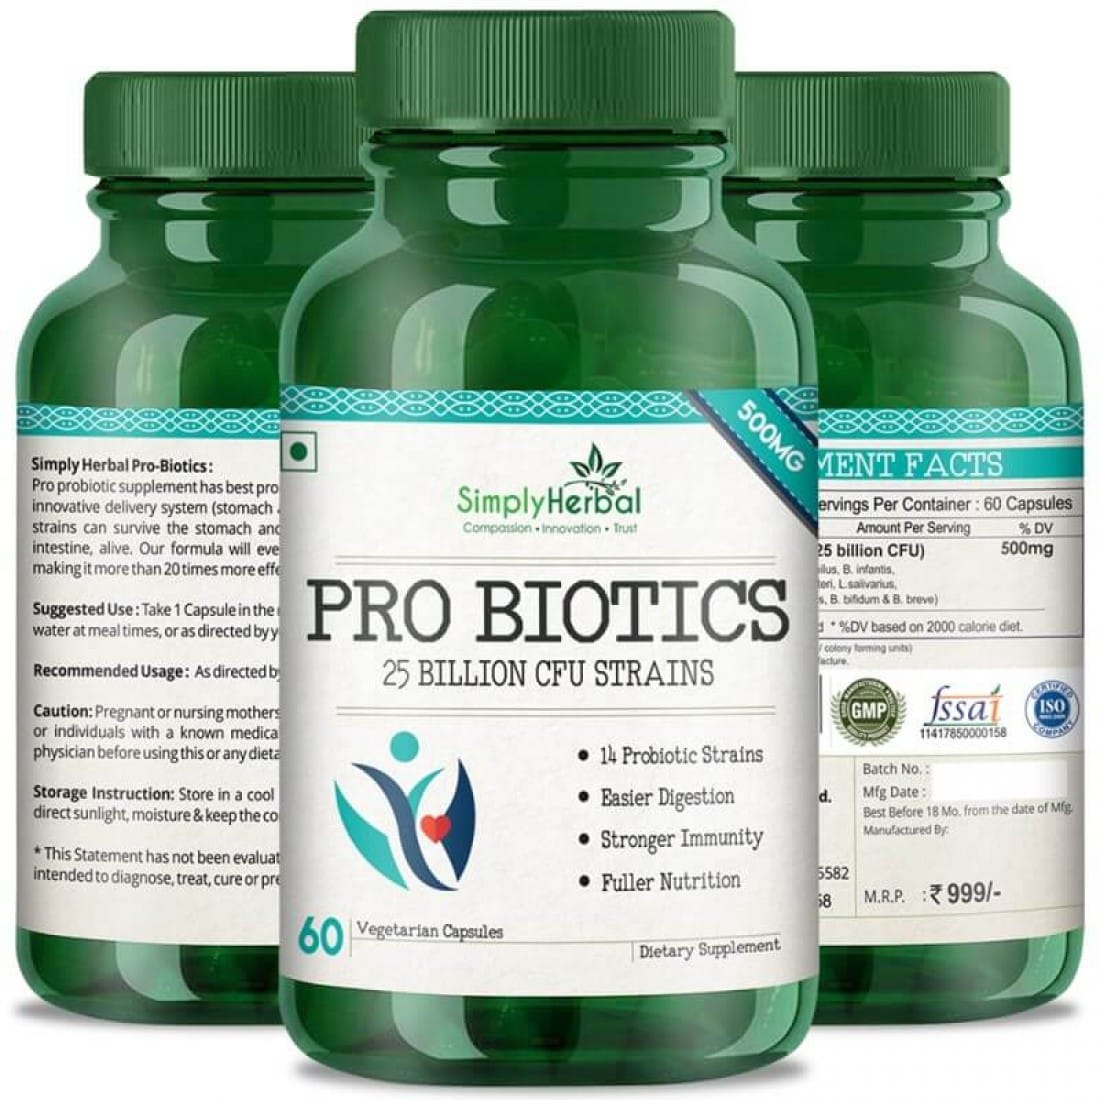 Simply Herbal Probiotic 25 Billion CFU Capsule Supplement Online Price ...